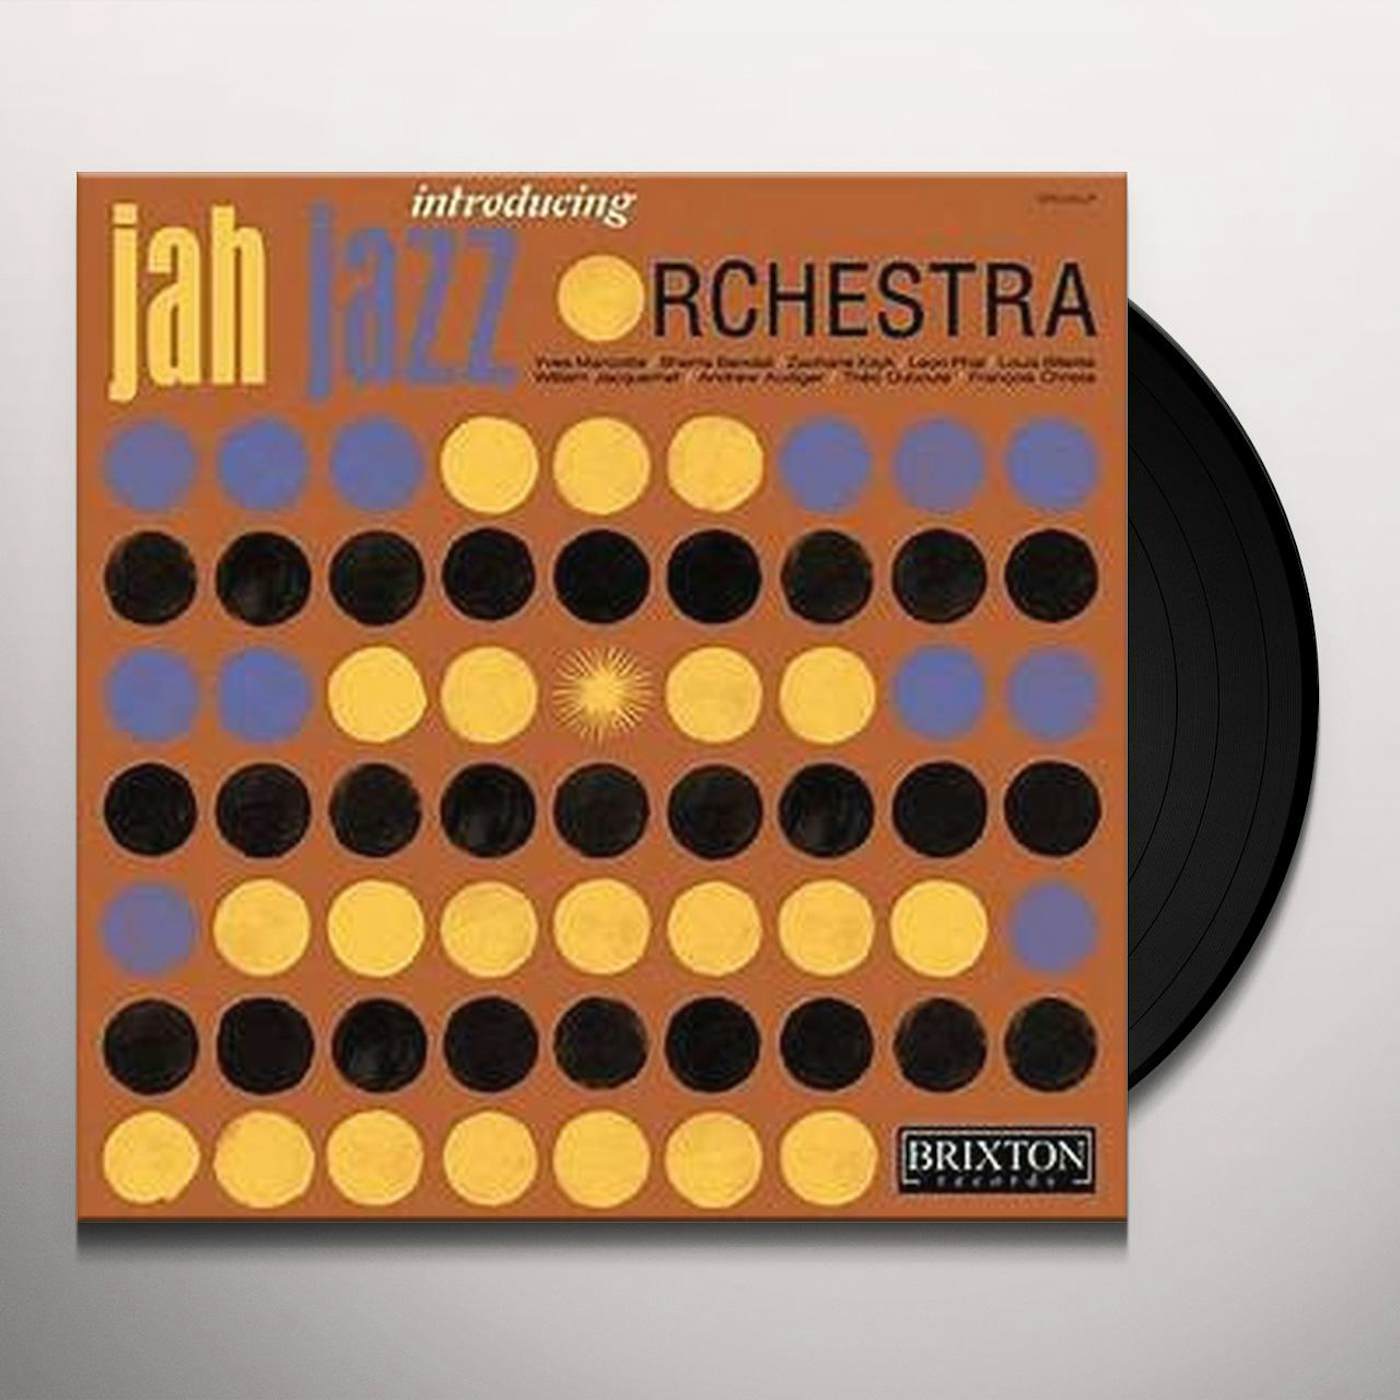 Introducing Jah Jazz Orchestra Vinyl Record